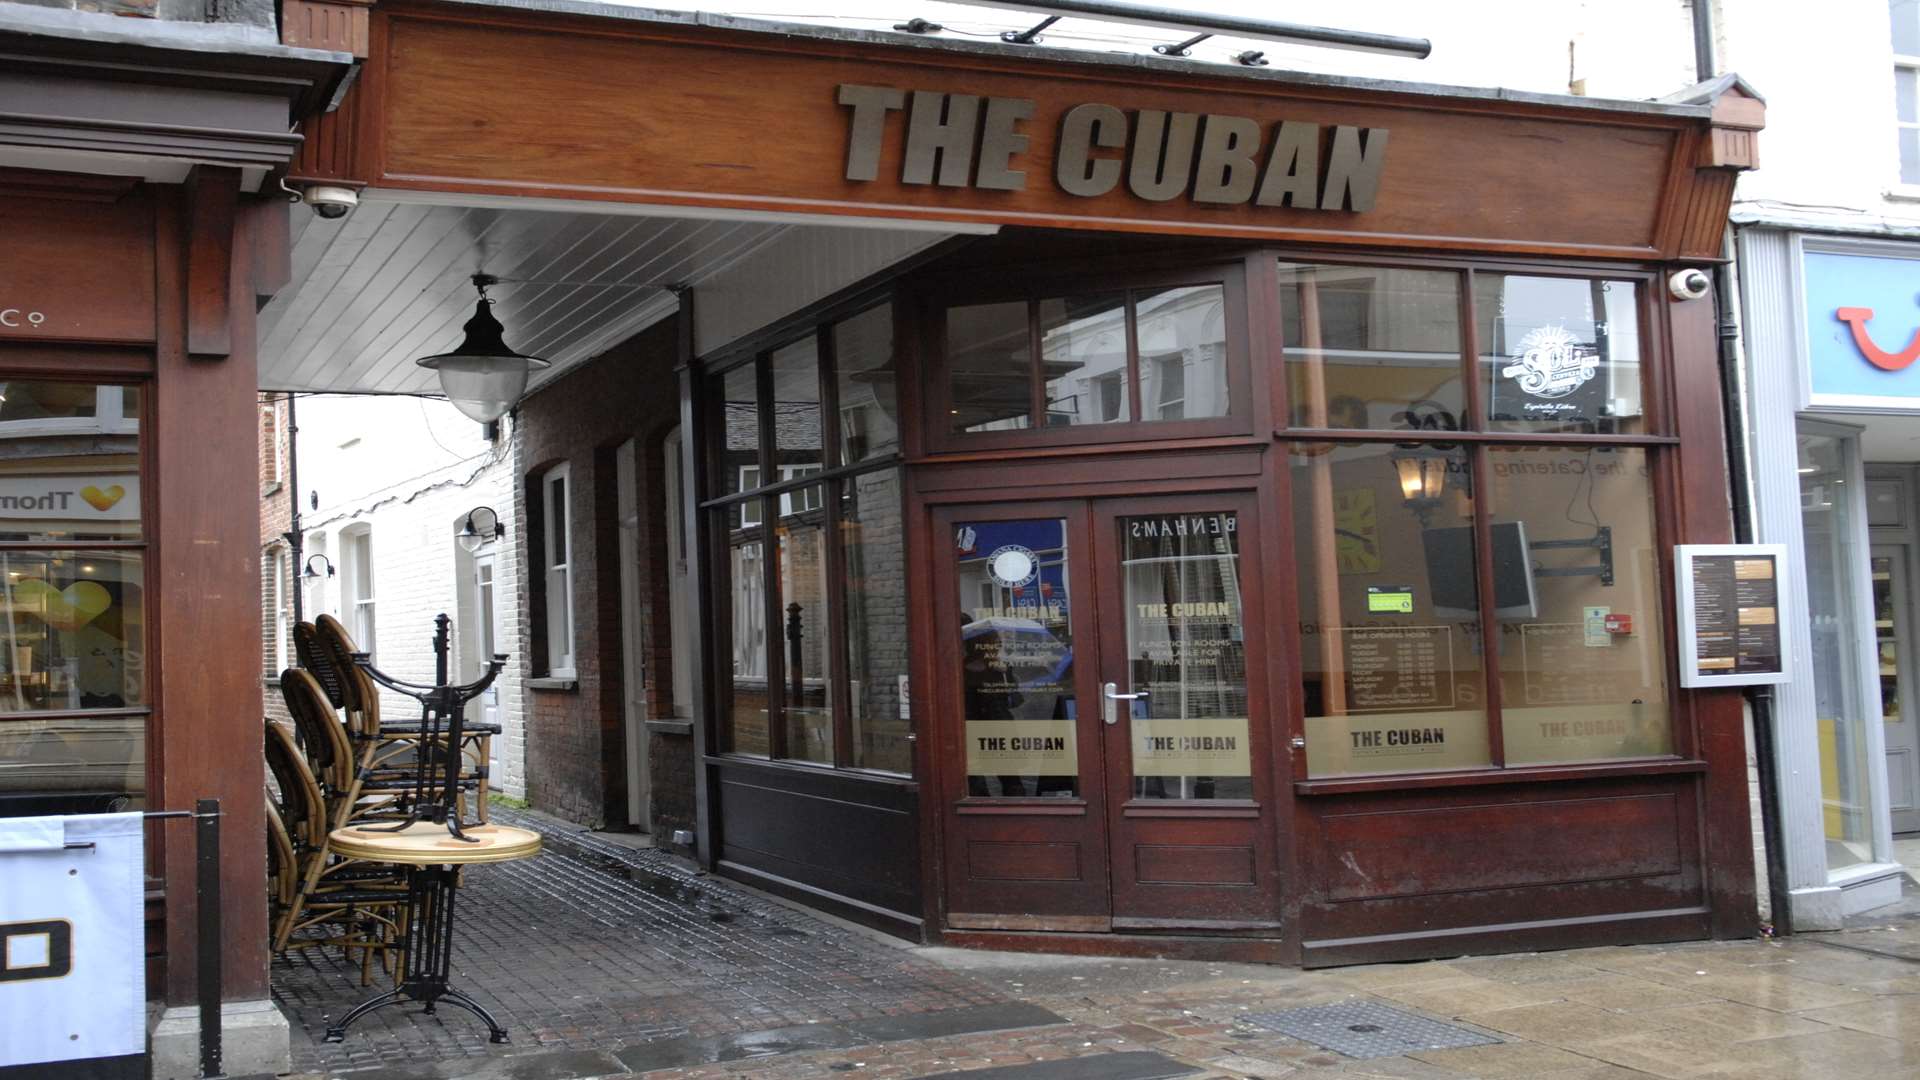 The Cuban in High Street, Canterbury.